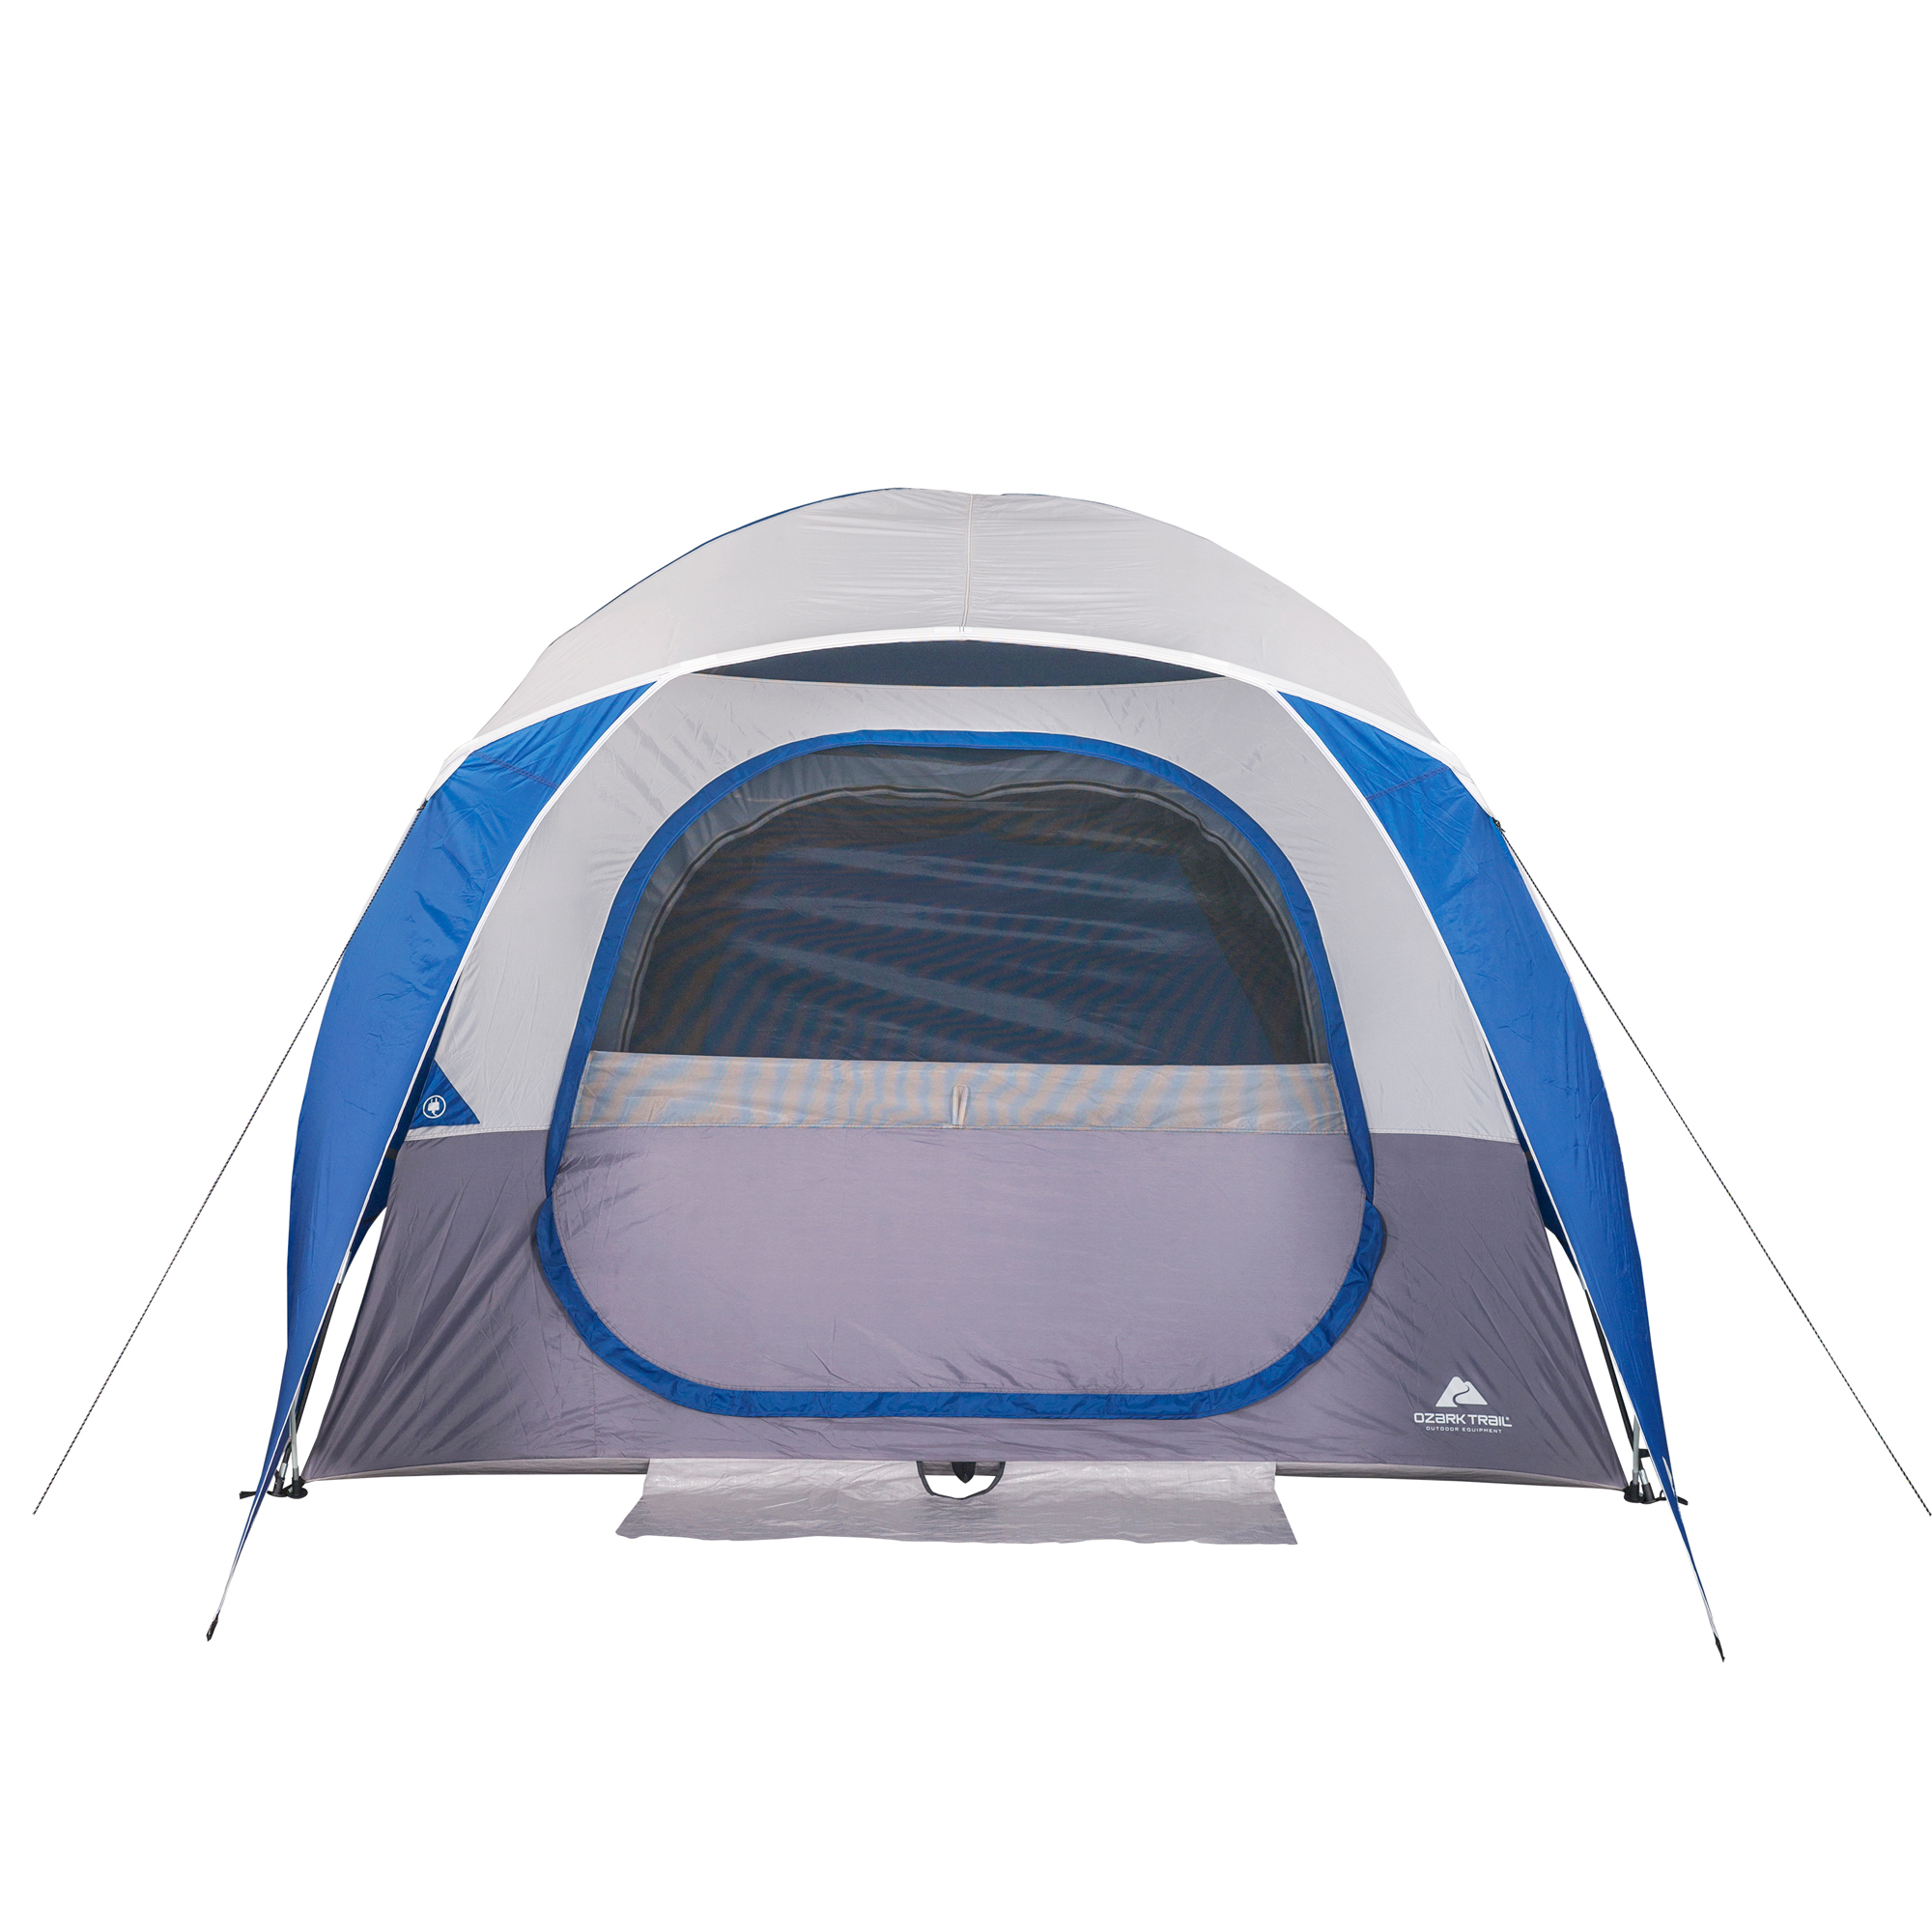 Ozark Trail 5-Person Dome Tent - image 4 of 10